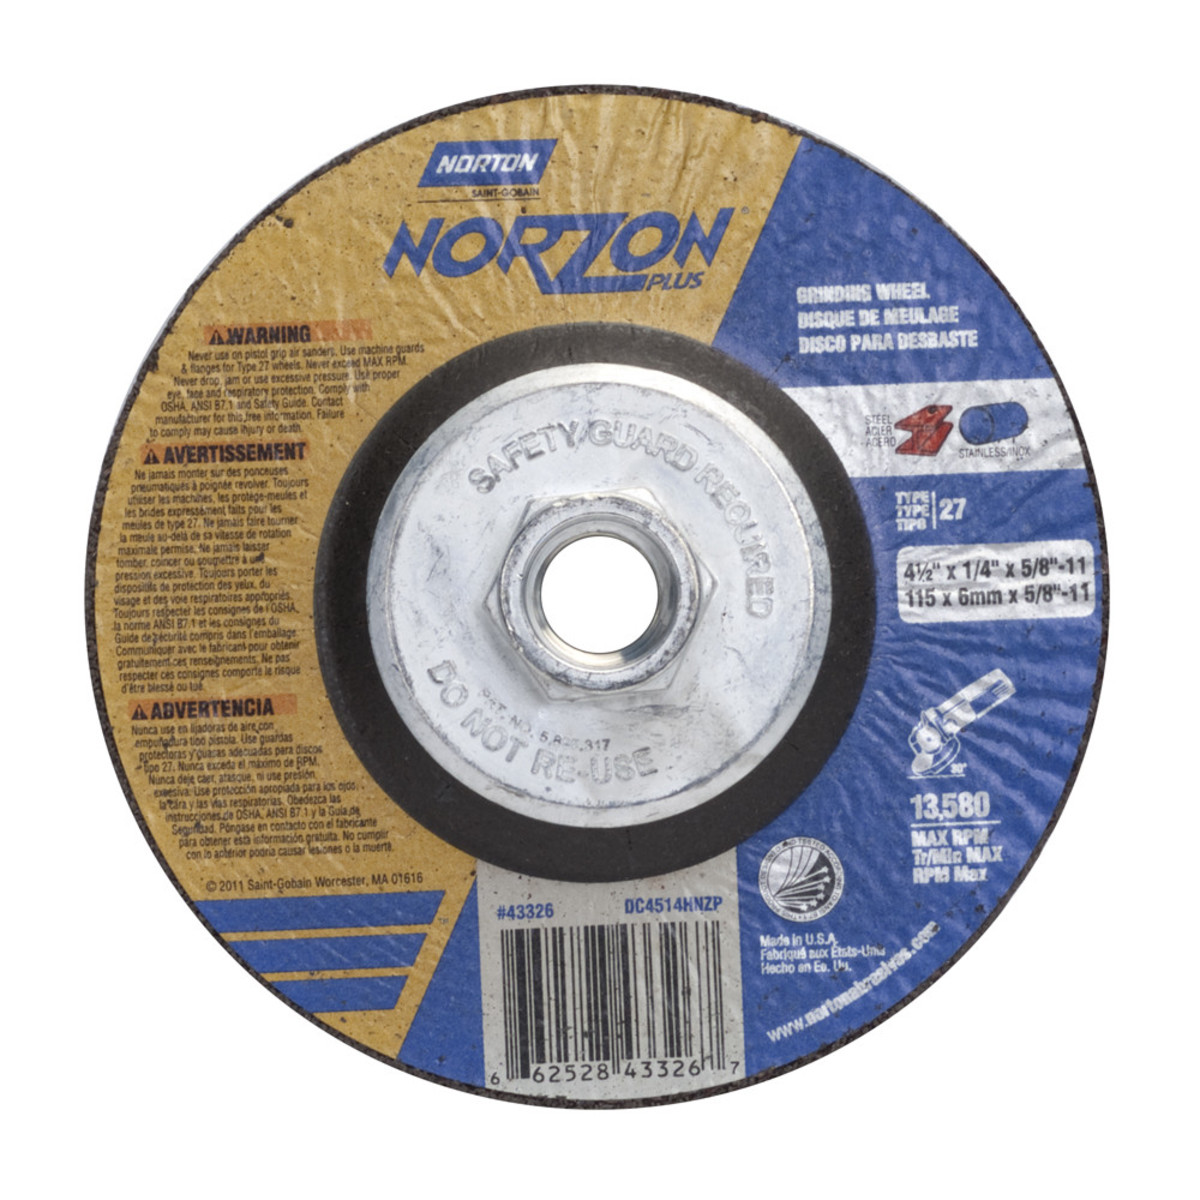 3/8 Arbor Norton Norzon Plus Depressed Center Abrasive Wheel 3 Diameter x 1/8 Thickness Pack of 25 Zirconia Alumina Type 27